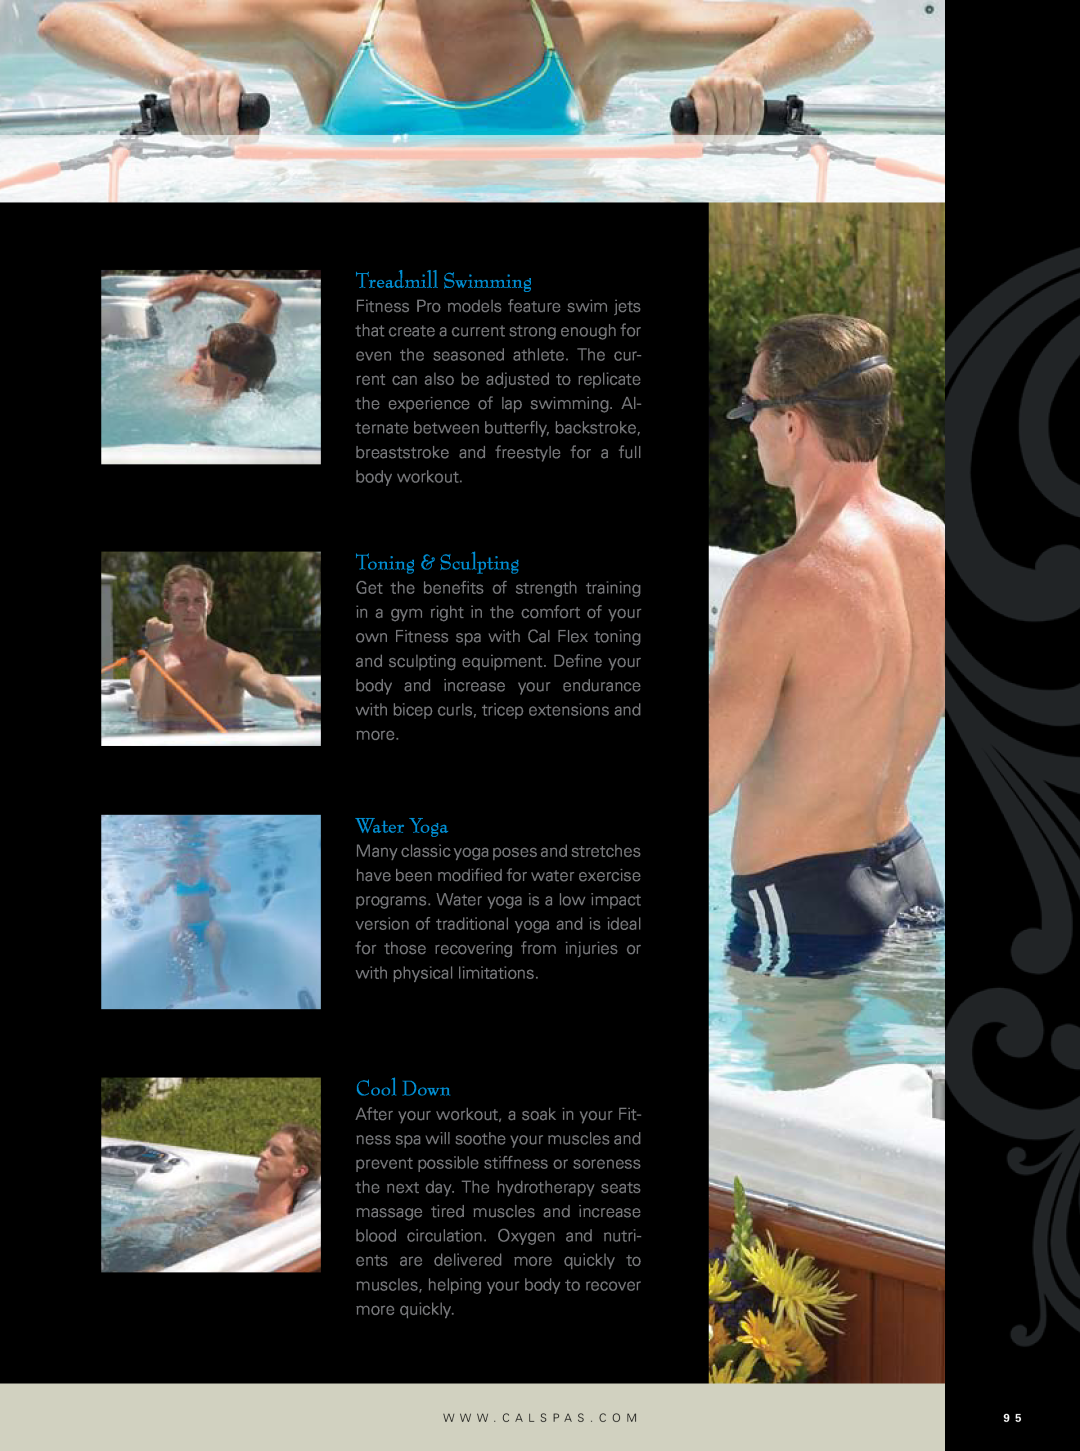 Cal Flame Hot Tub manual Treadmill Swimming, Toning & Sculpting, Water Yoga, Cool Down 